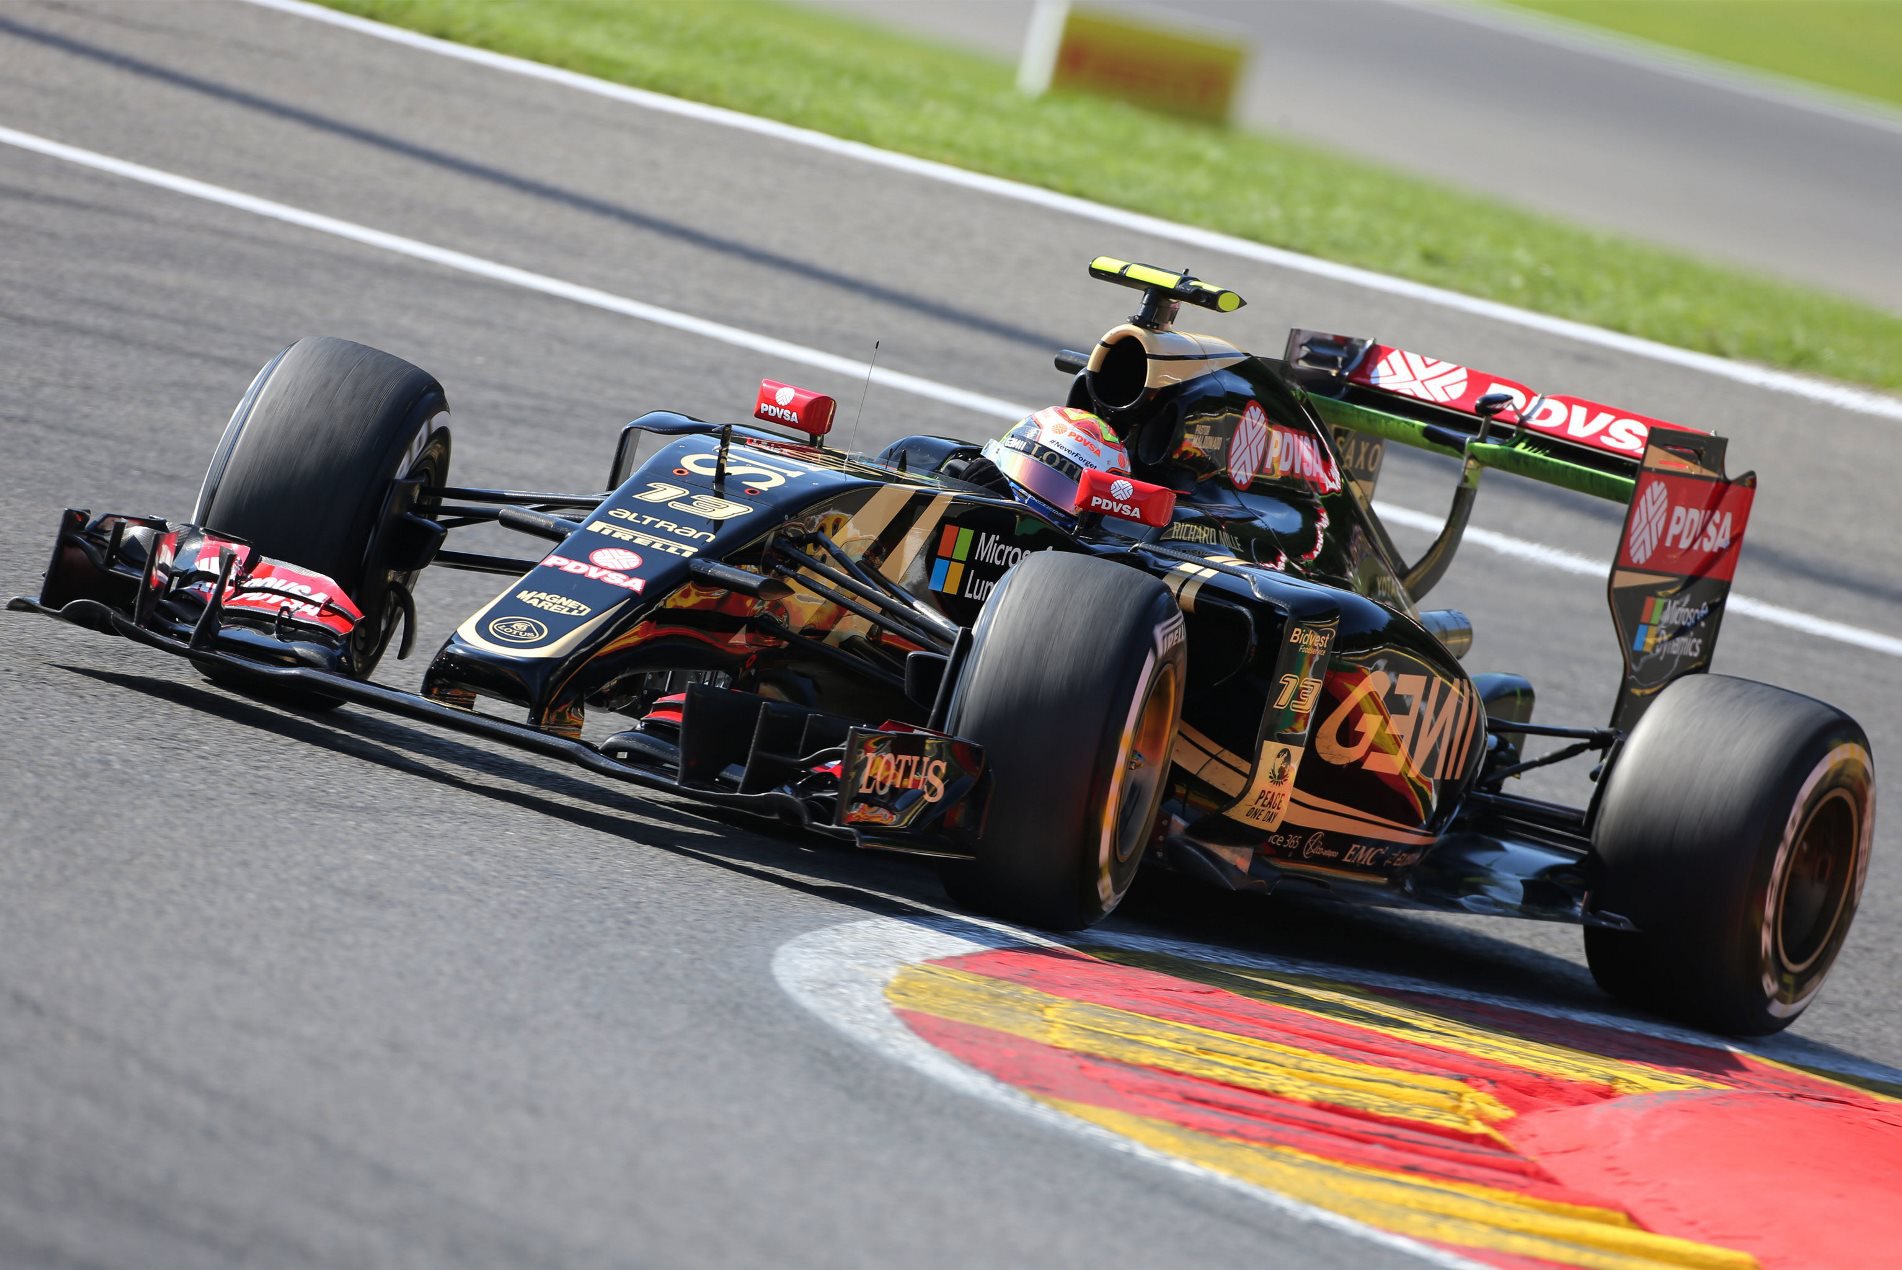 Pastor Maldonado při sobotní kvalifikaci na GP Belgie 2015 v monopostu Lotus E23 - Mercedes